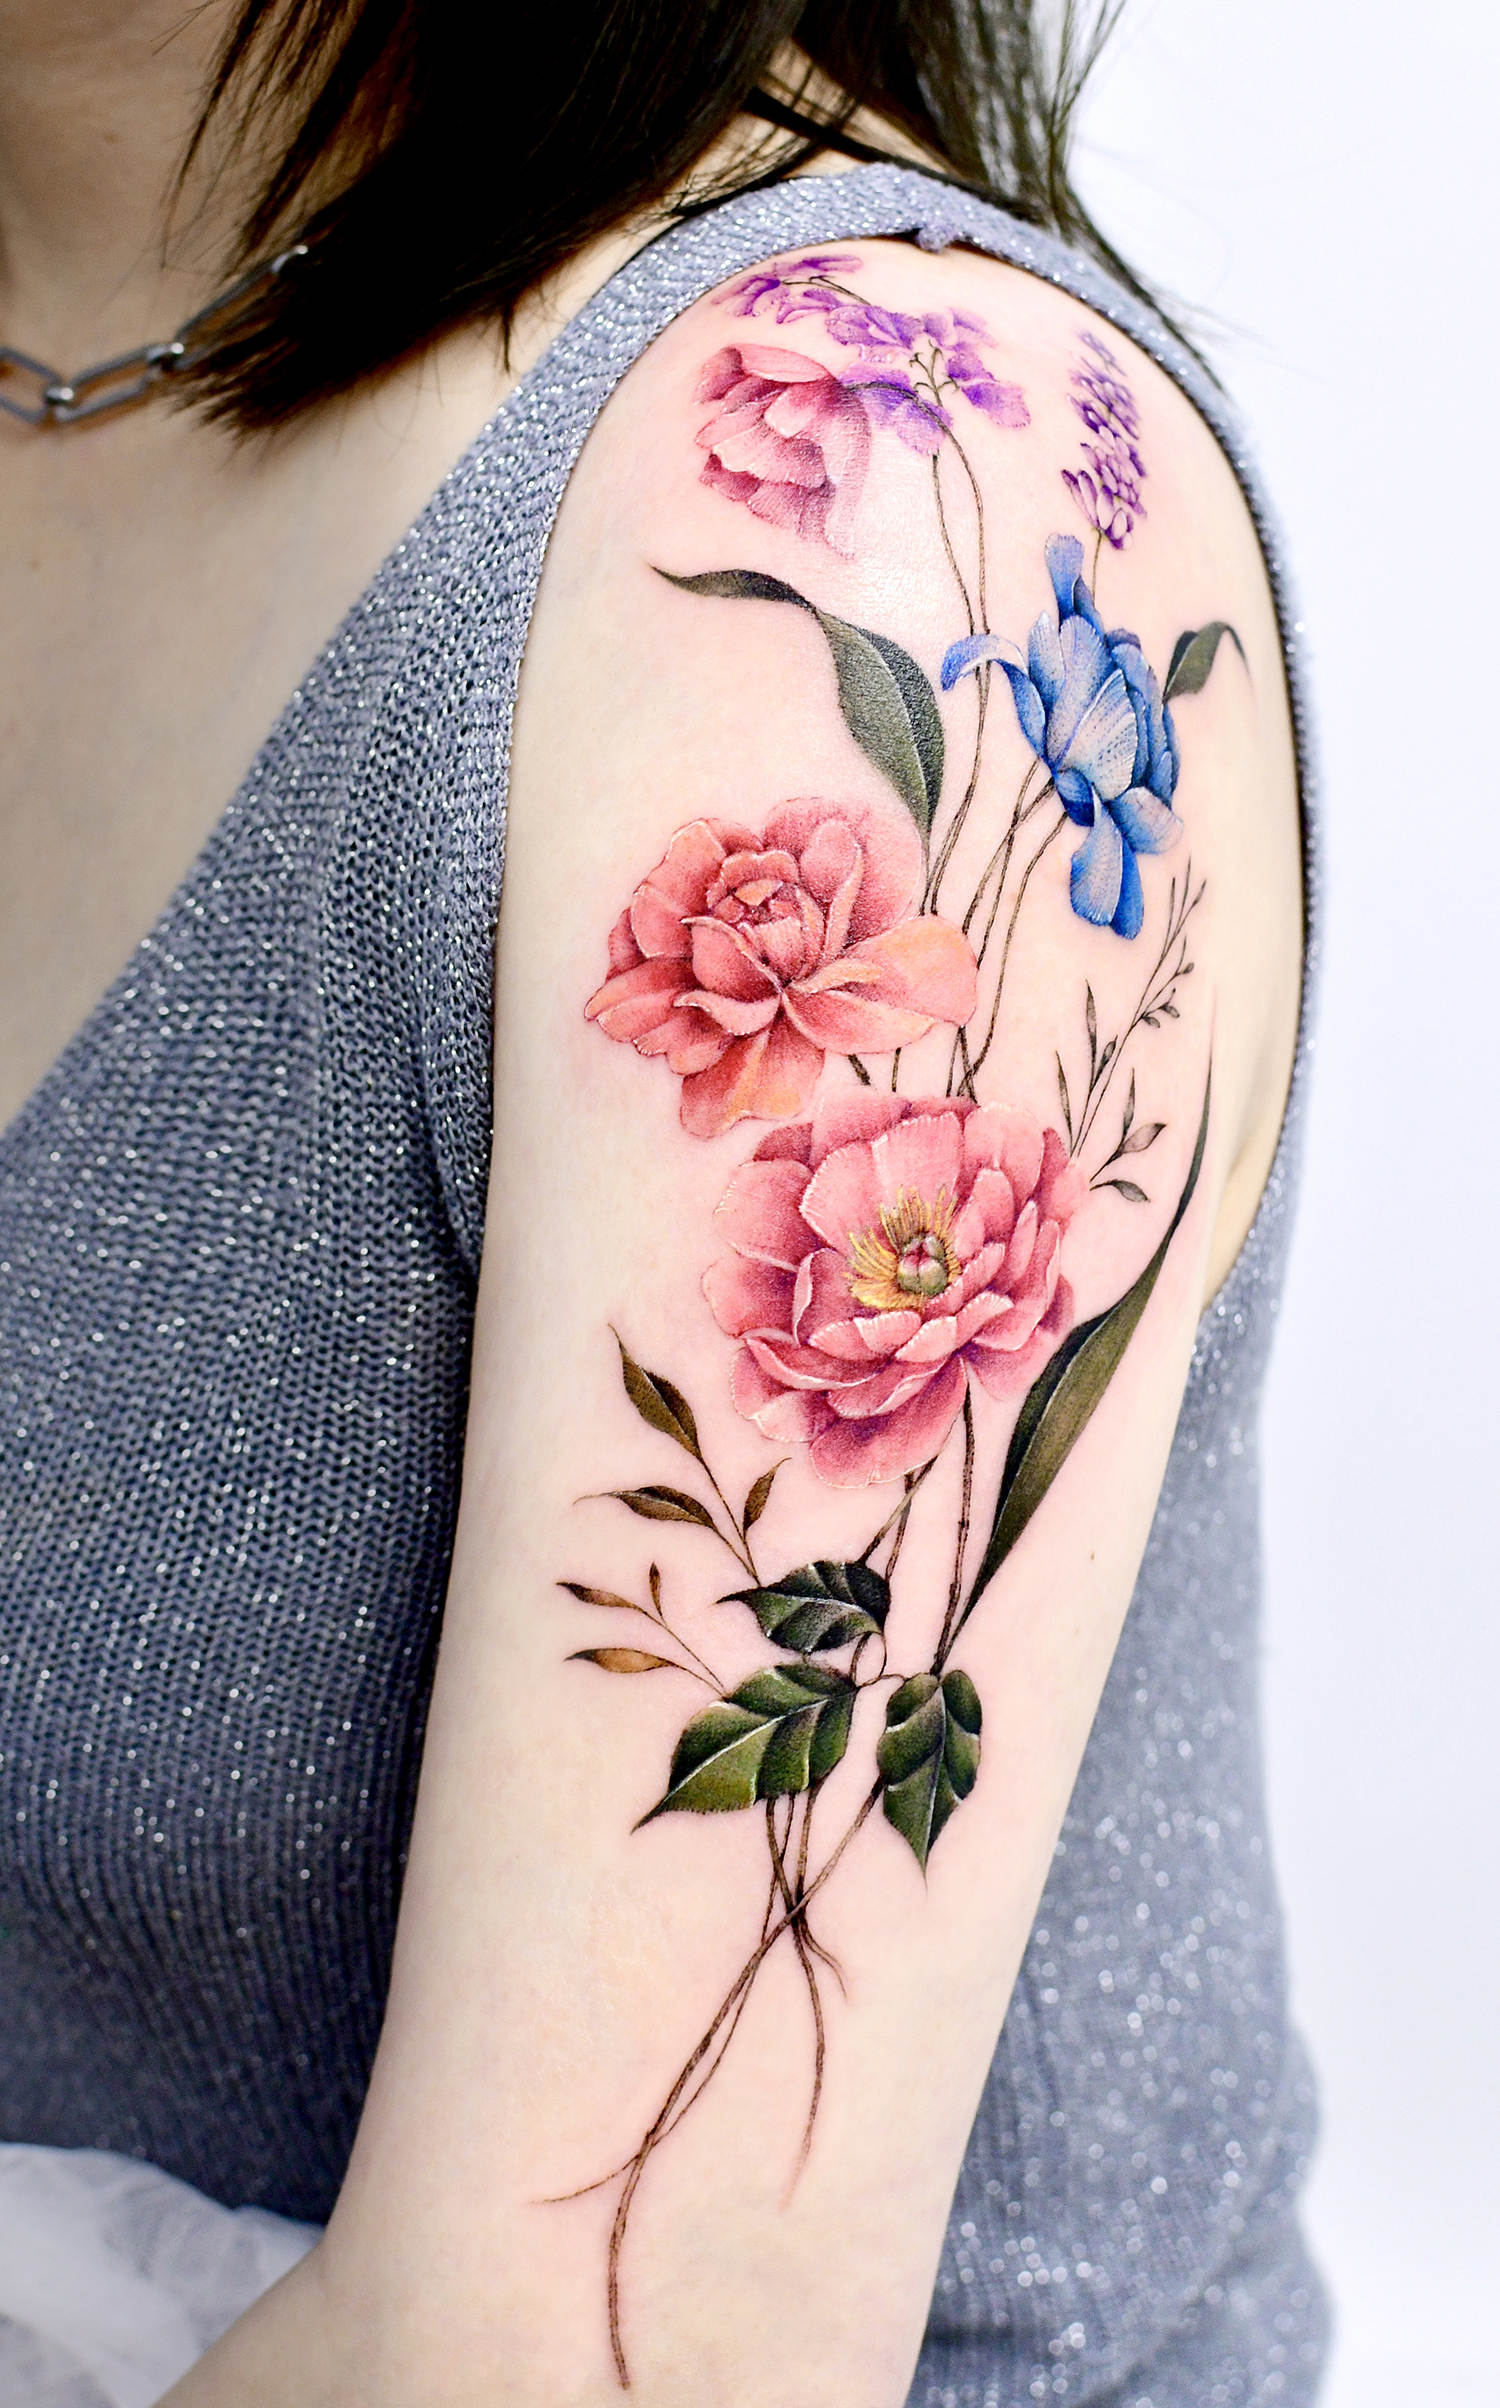 arm tattoo with flower boquet by yerae